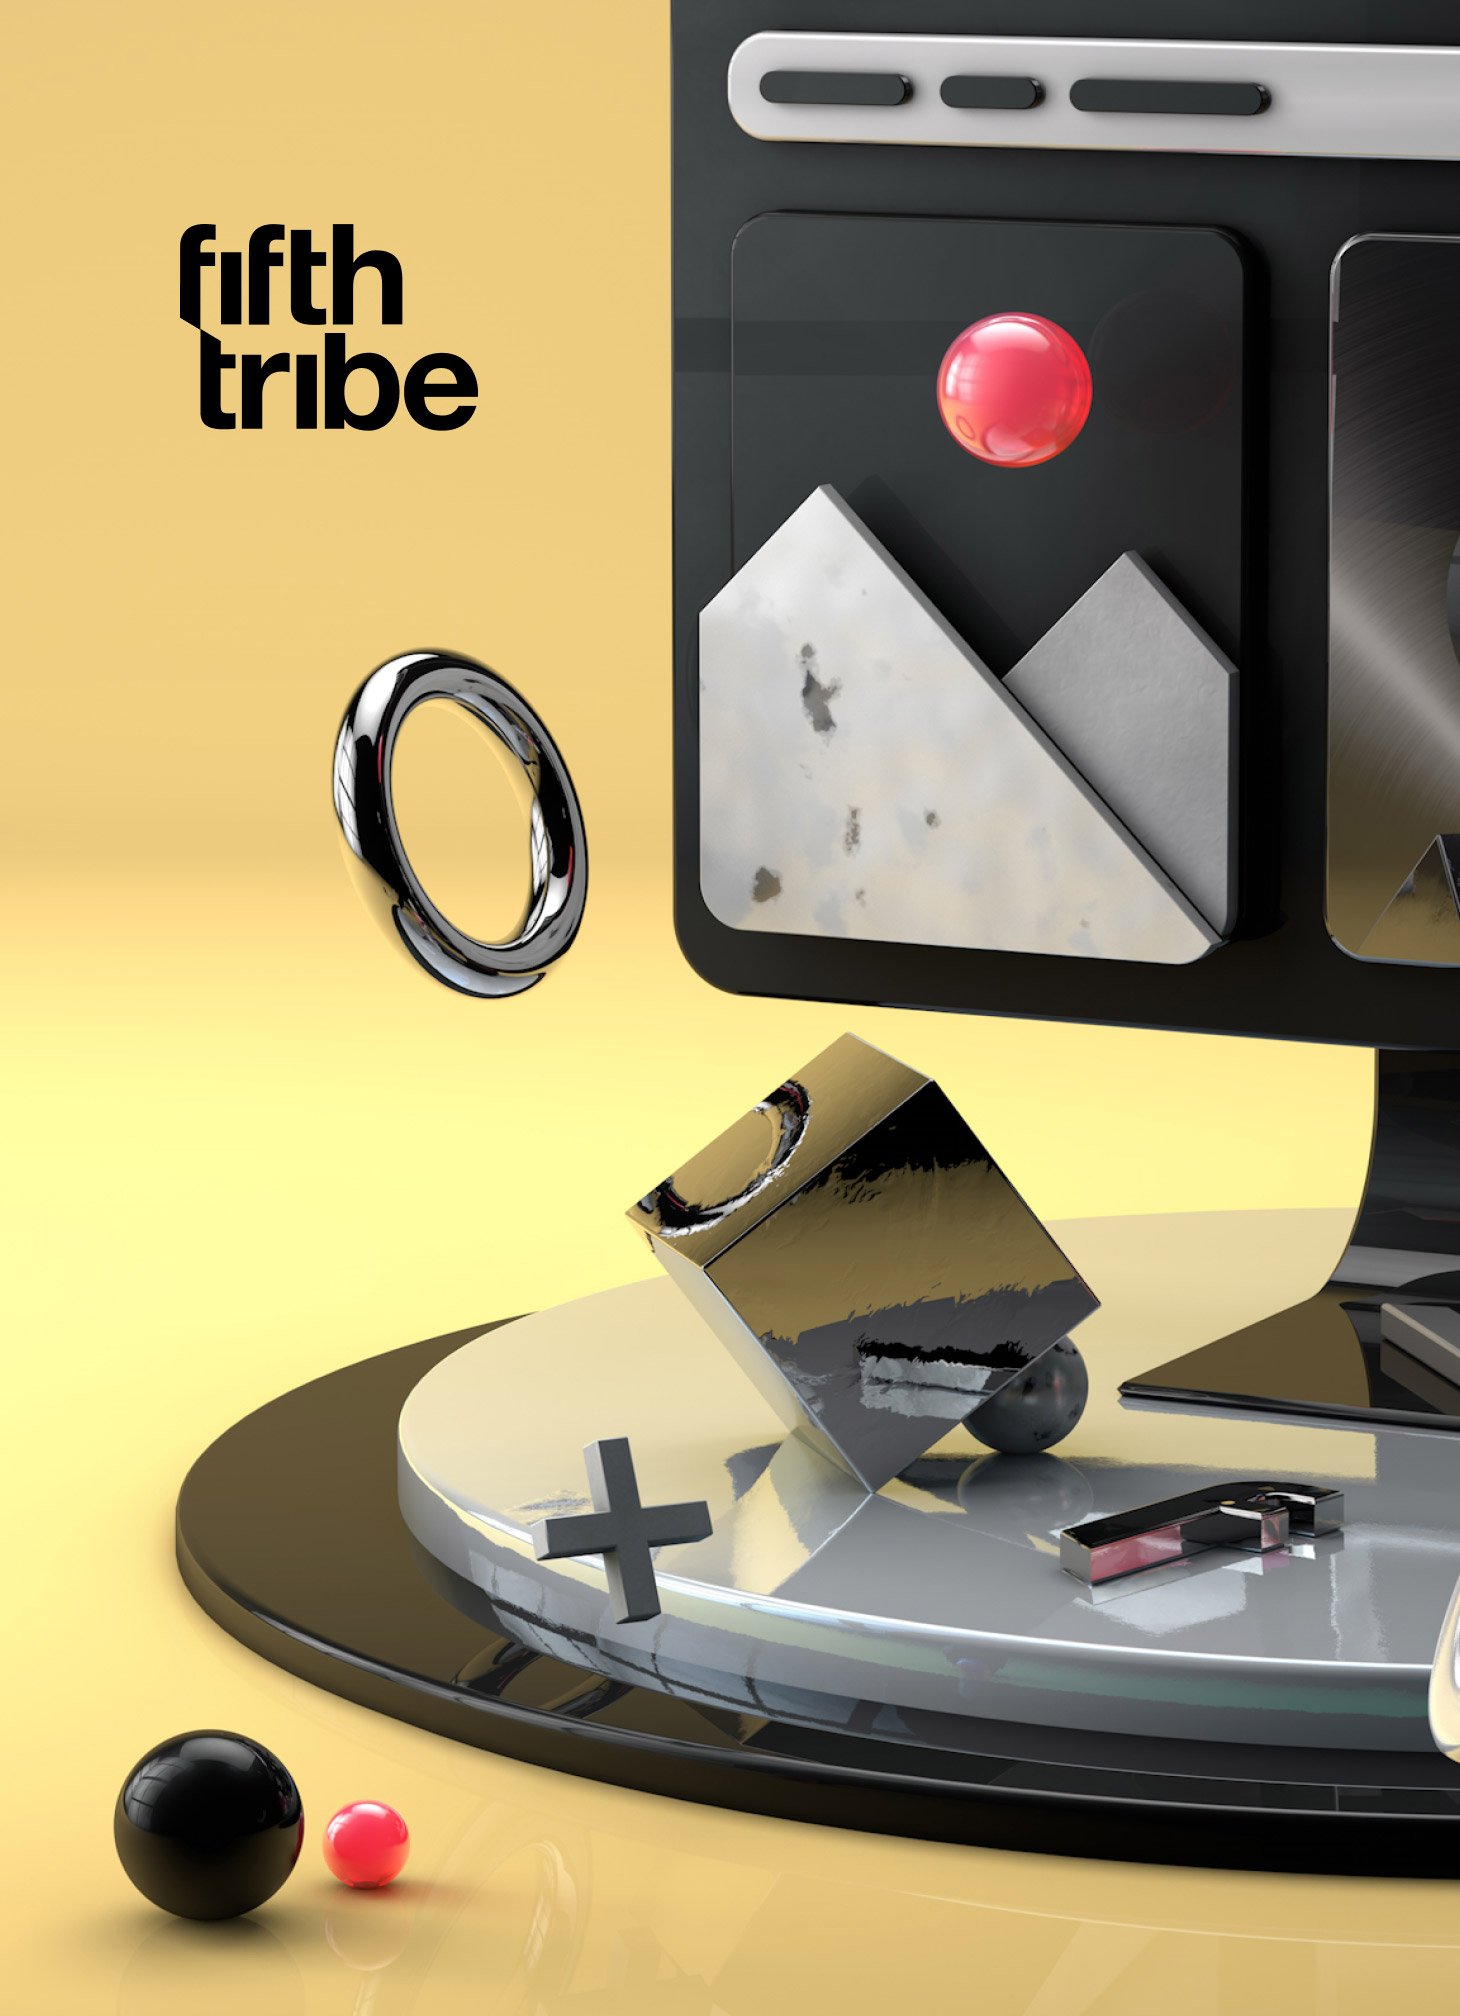 Revitalizing Fifth Tribe's Digital Presence: A UX/UI Design Case Study for a Global Digital Agency